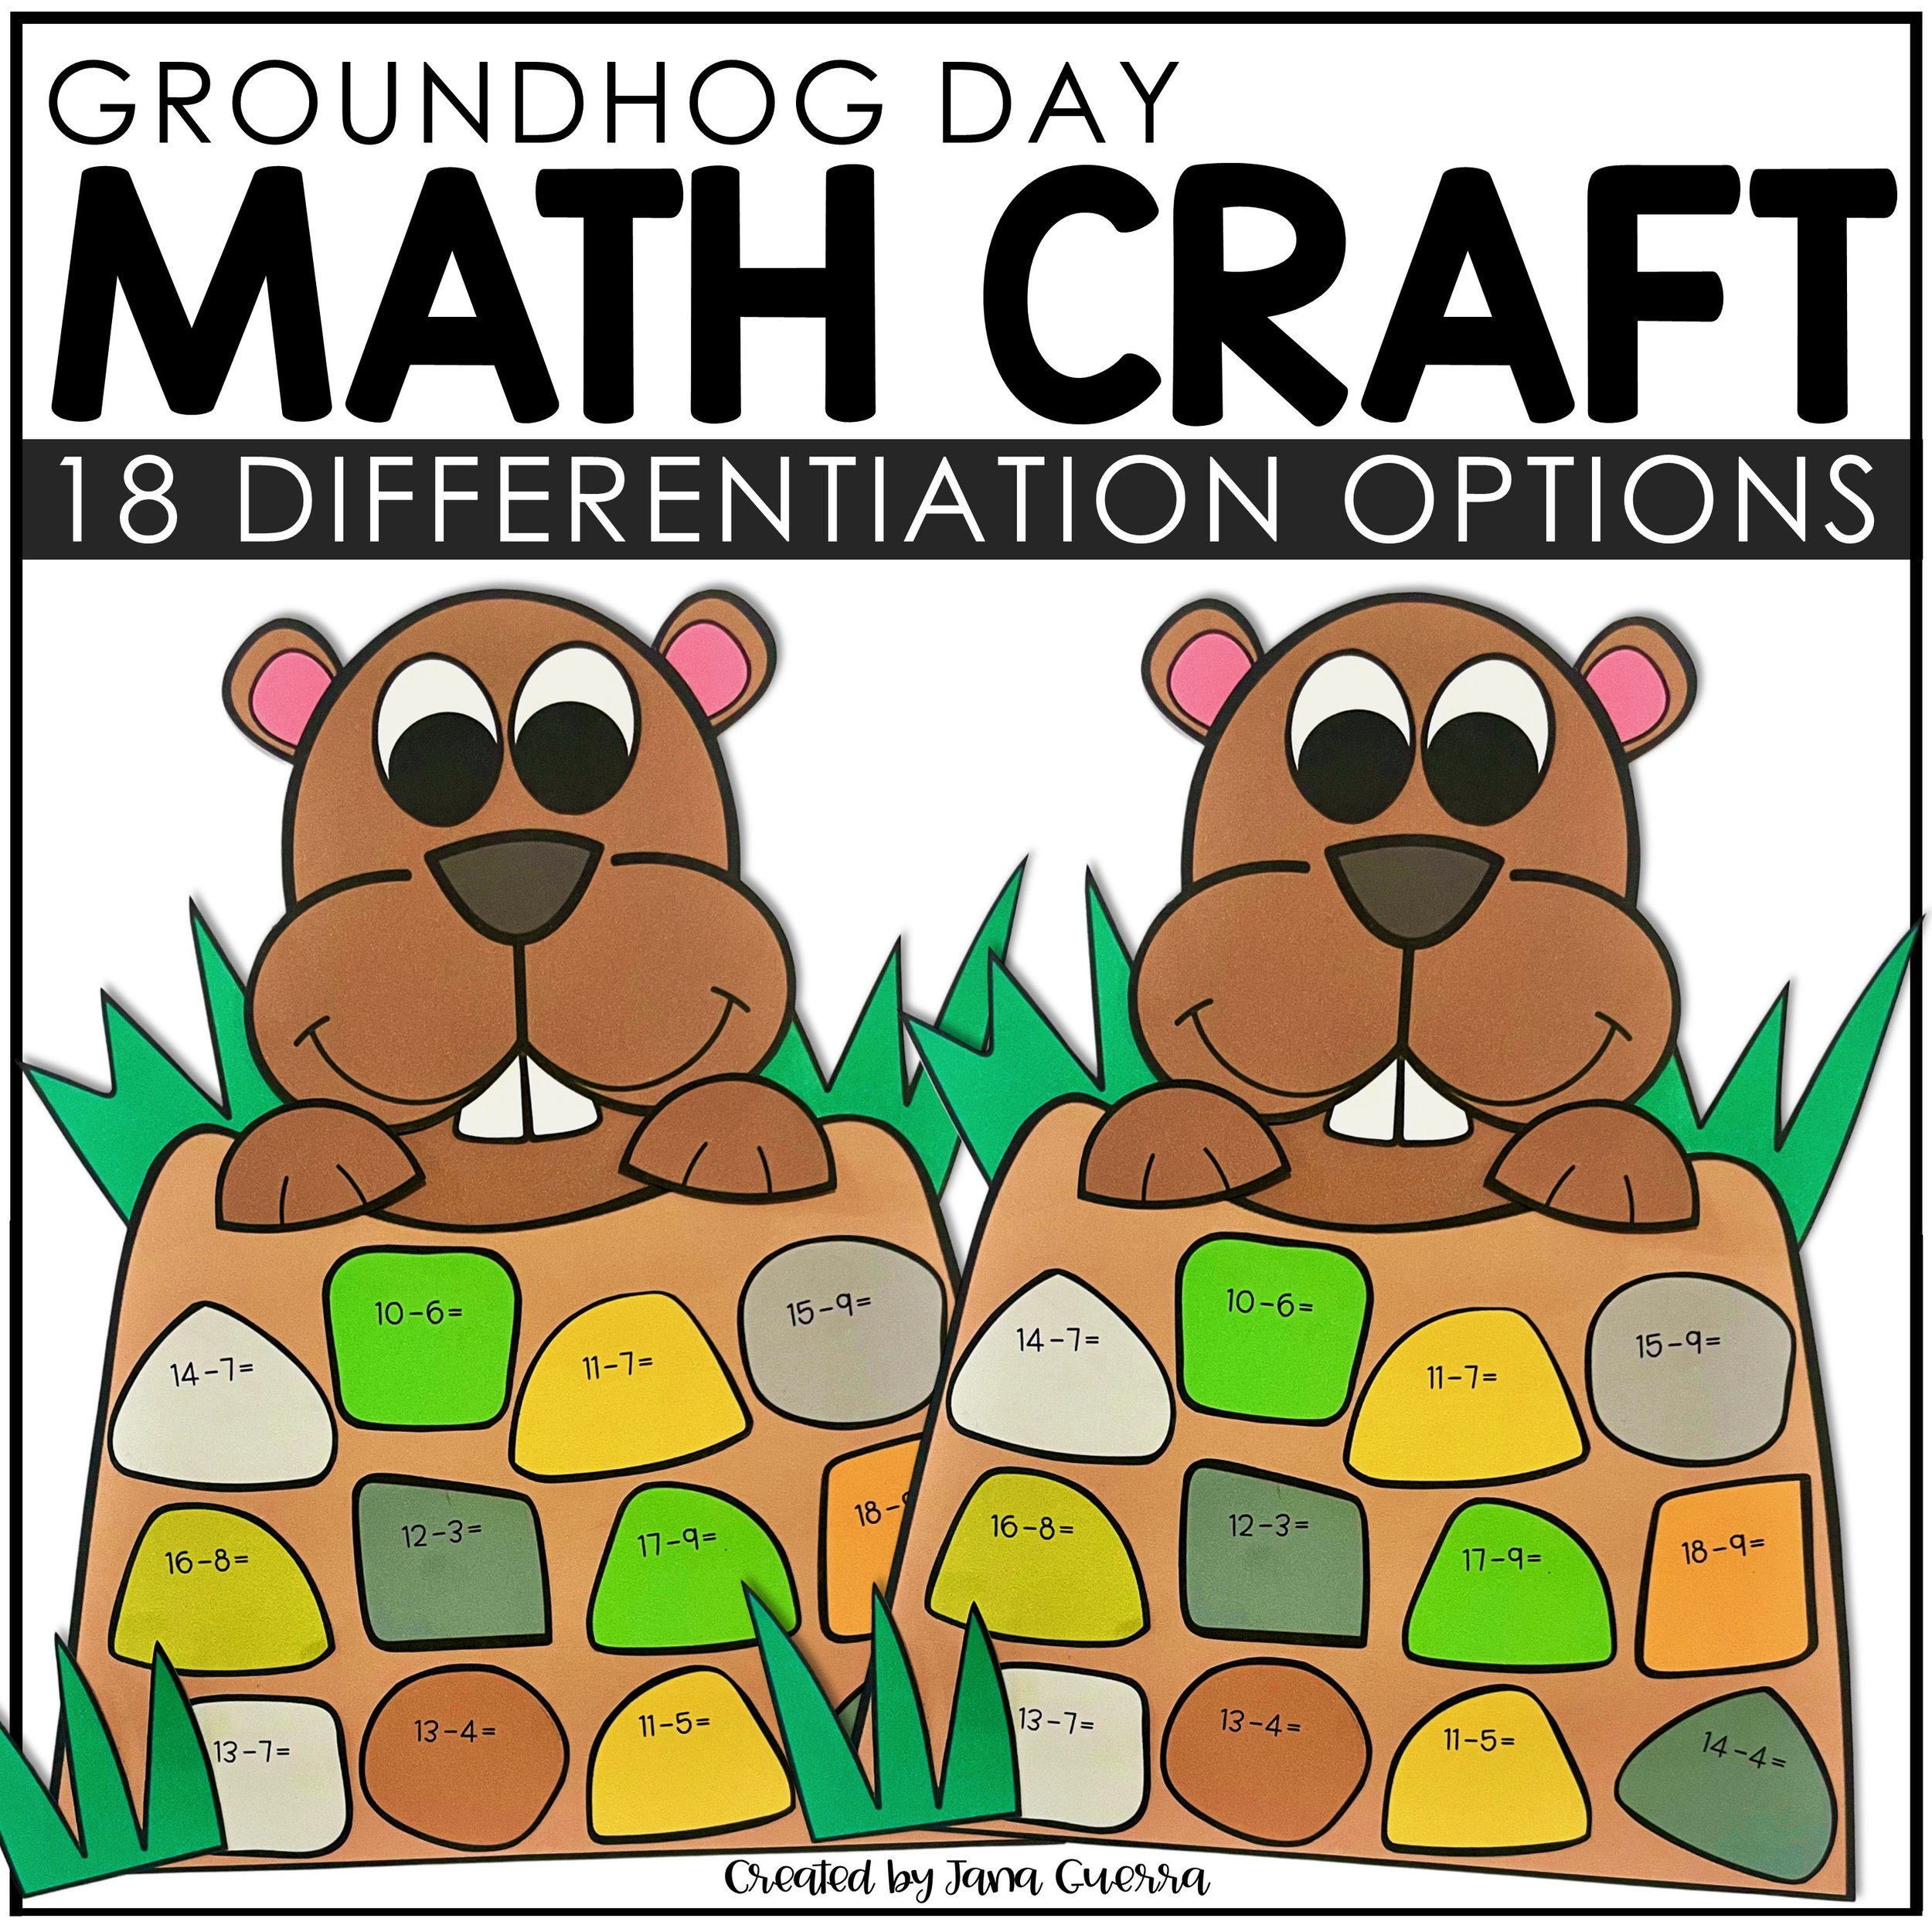 Groundhog Day Math Craft